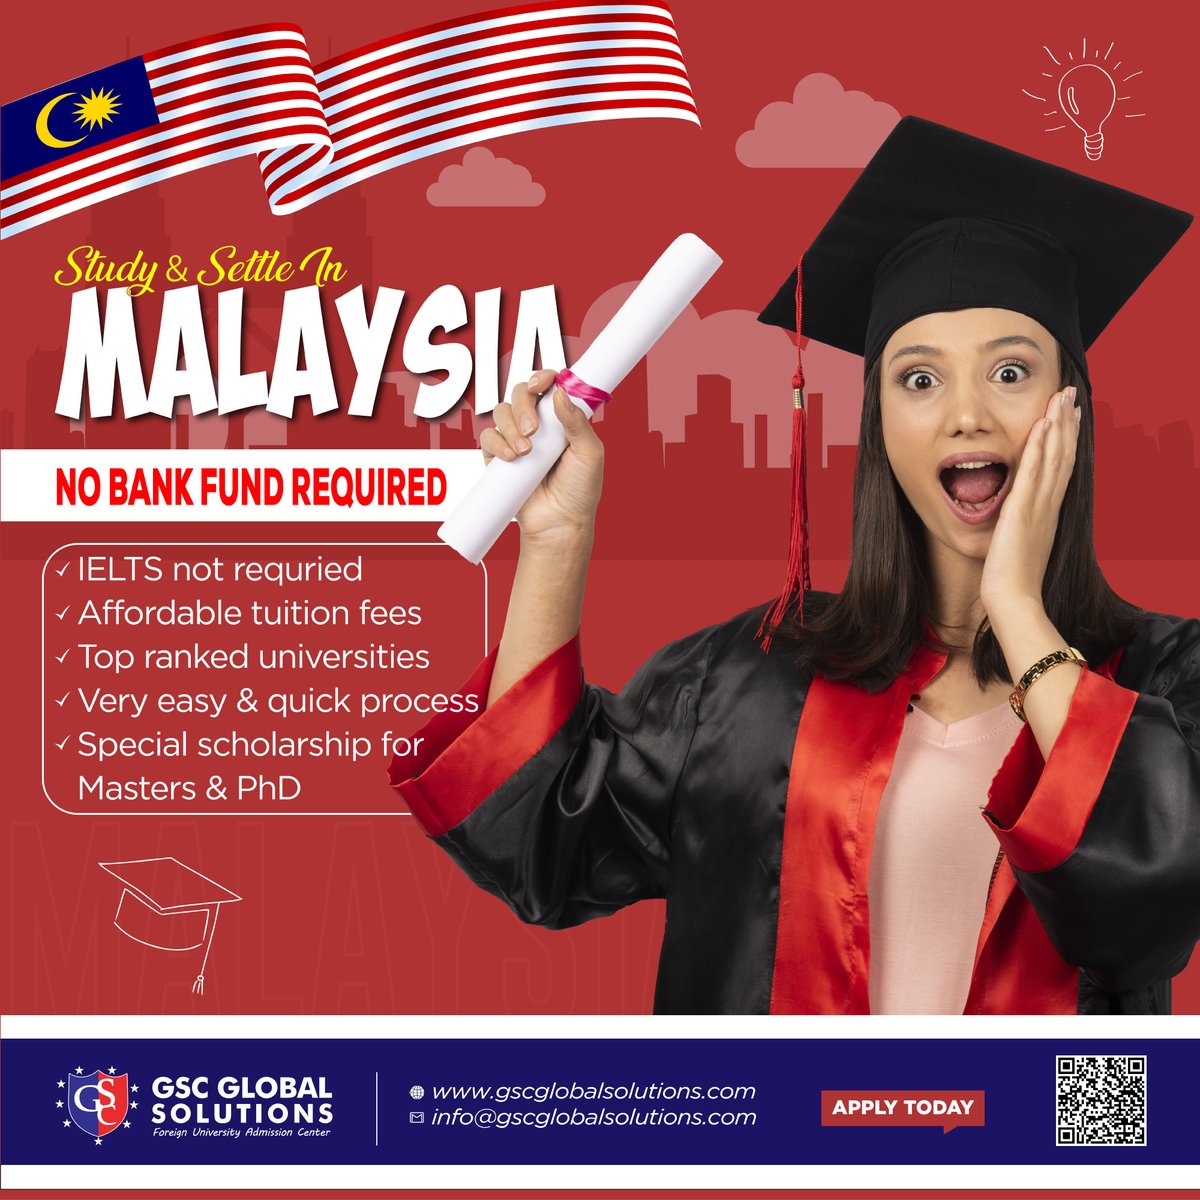 #studyinmalaysia #gsc #gscglobalsolutions #gscglobal #studyabroad #malaysia